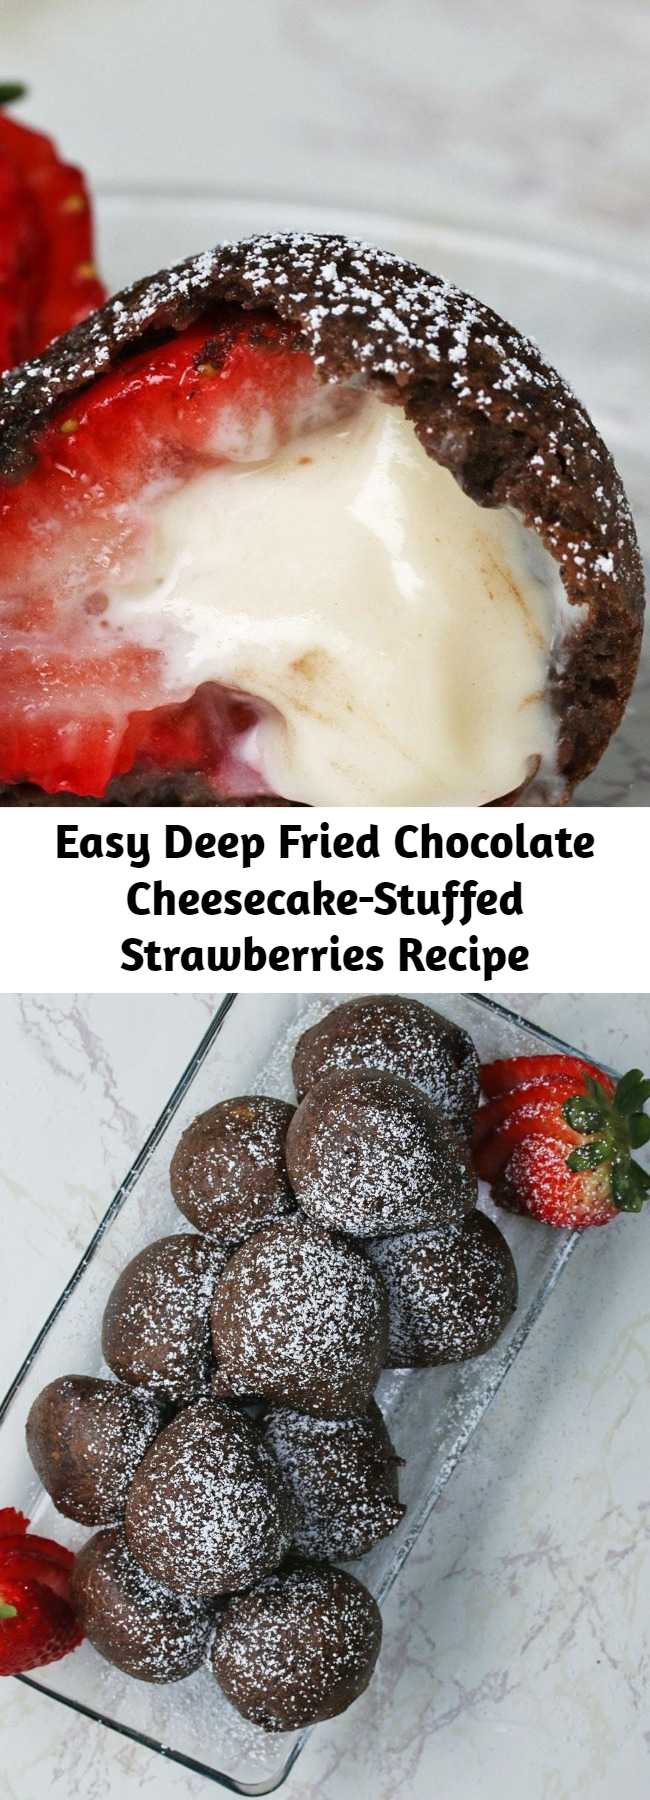 Easy Deep Fried Chocolate Cheesecake-Stuffed Strawberries Recipe